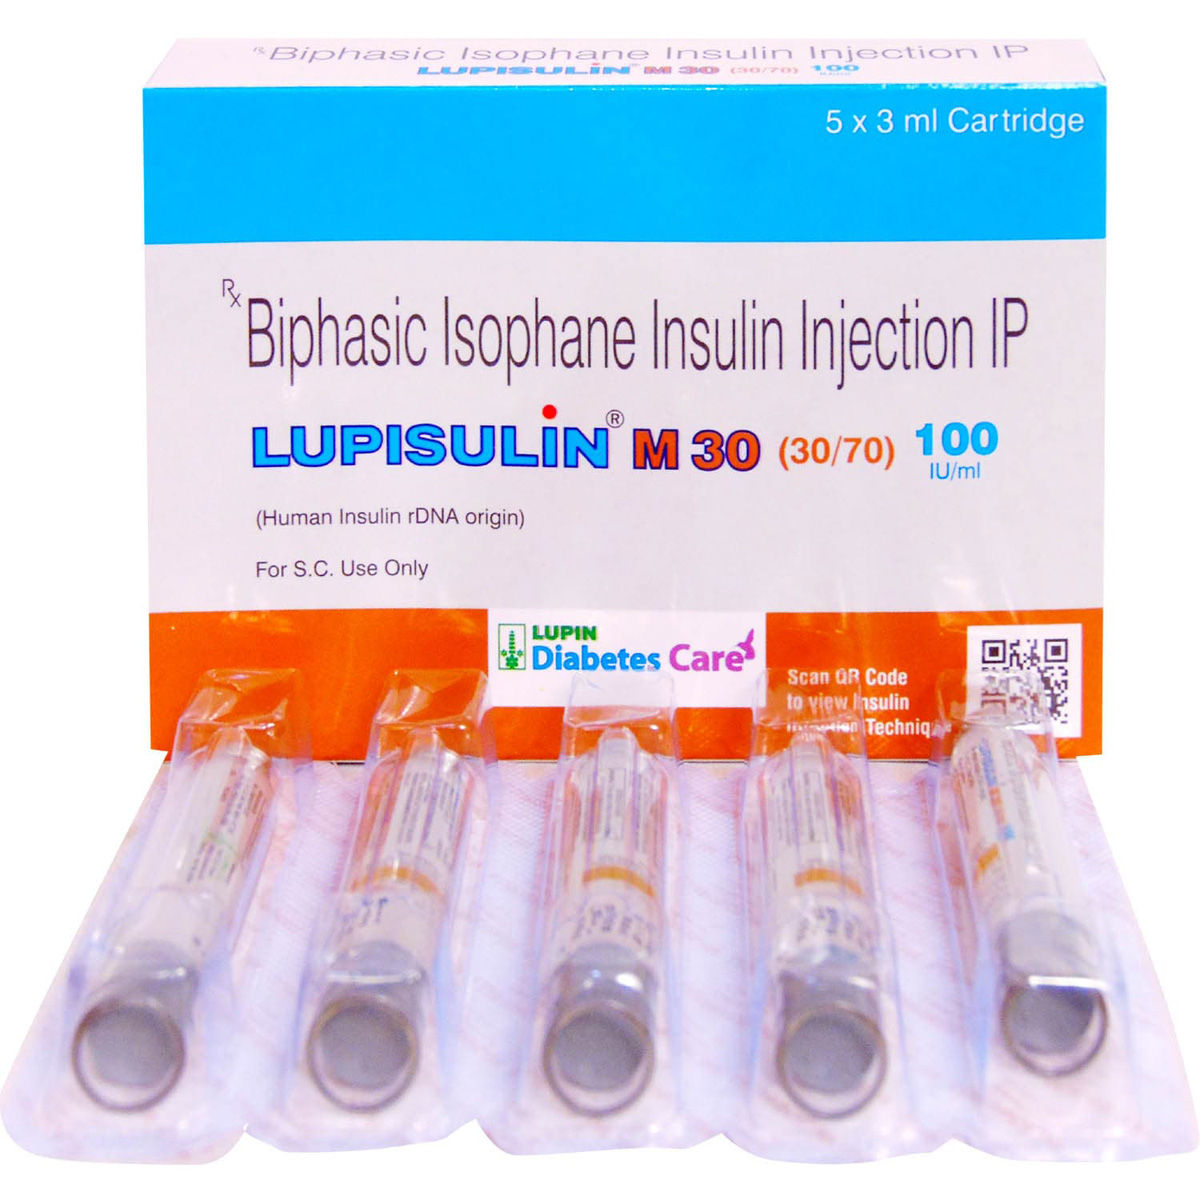 Buy Lupisulin M 30 100IU/ml Injection 5 x 3 ml Online